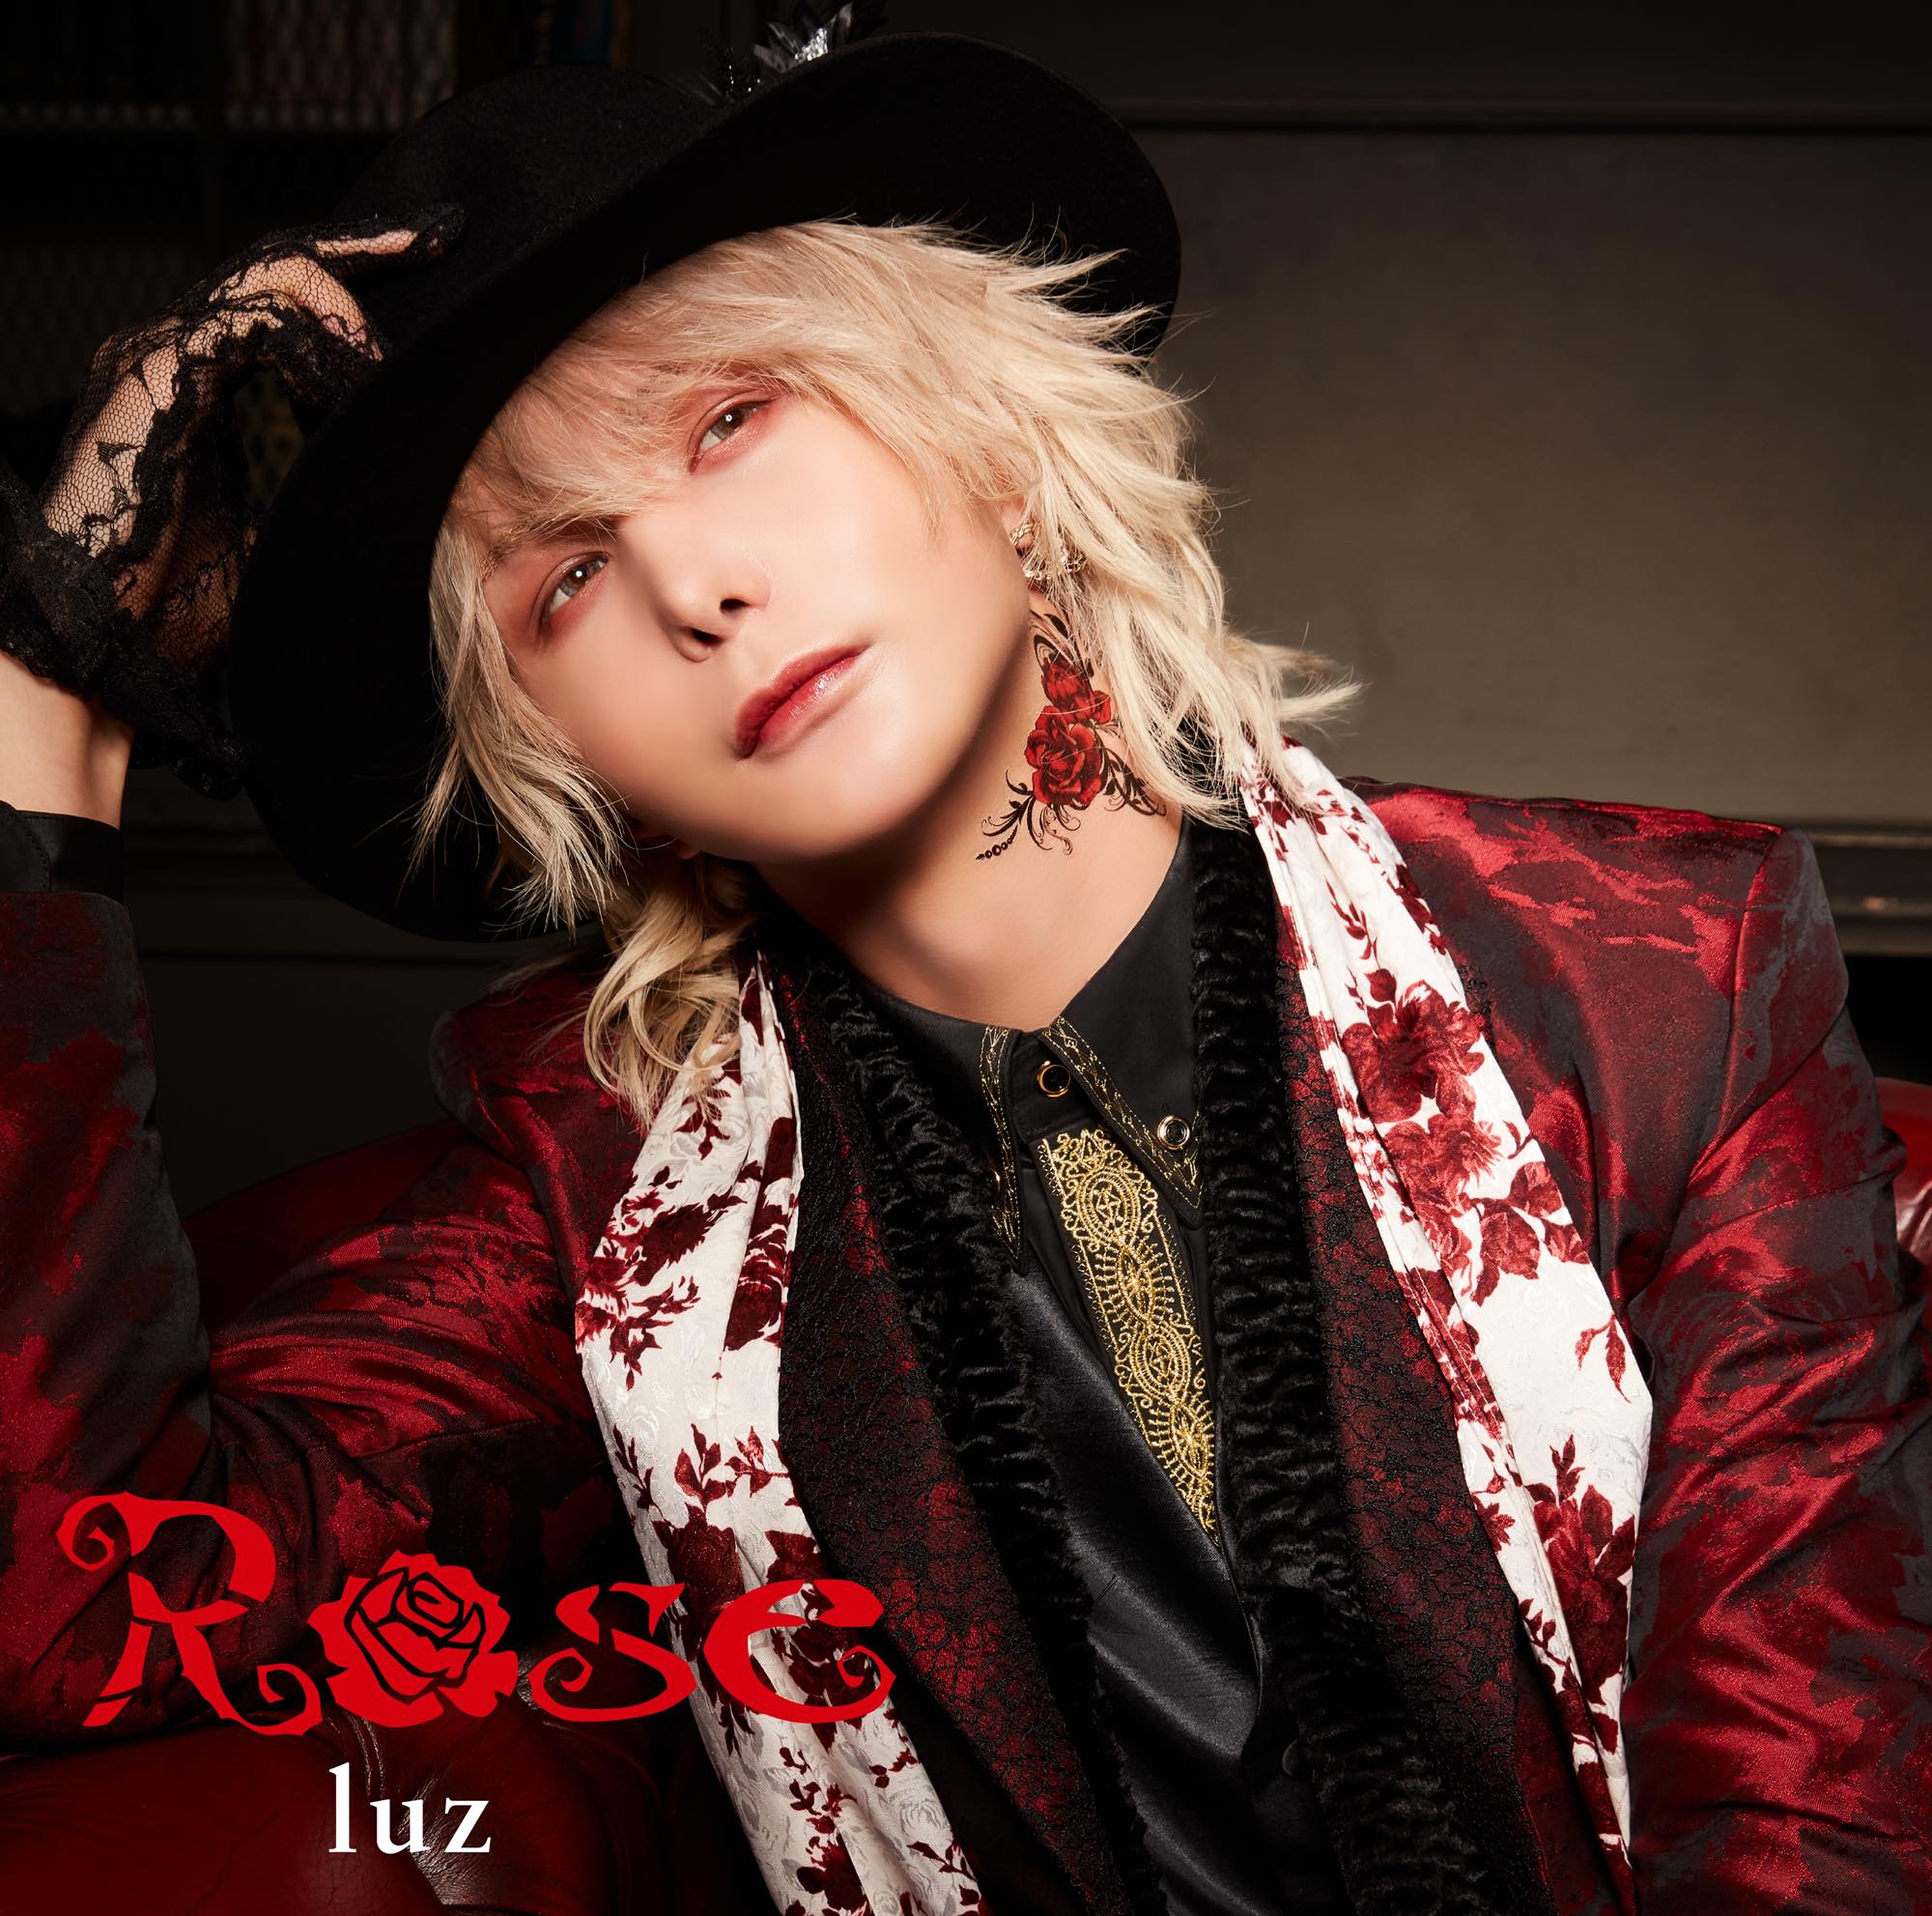 Luz 2nd Single Rose 収録曲 アイビーラスト Feat Oscuro ミュージックビデオ公開 株式会社ポニーキャニオンのプレスリリース